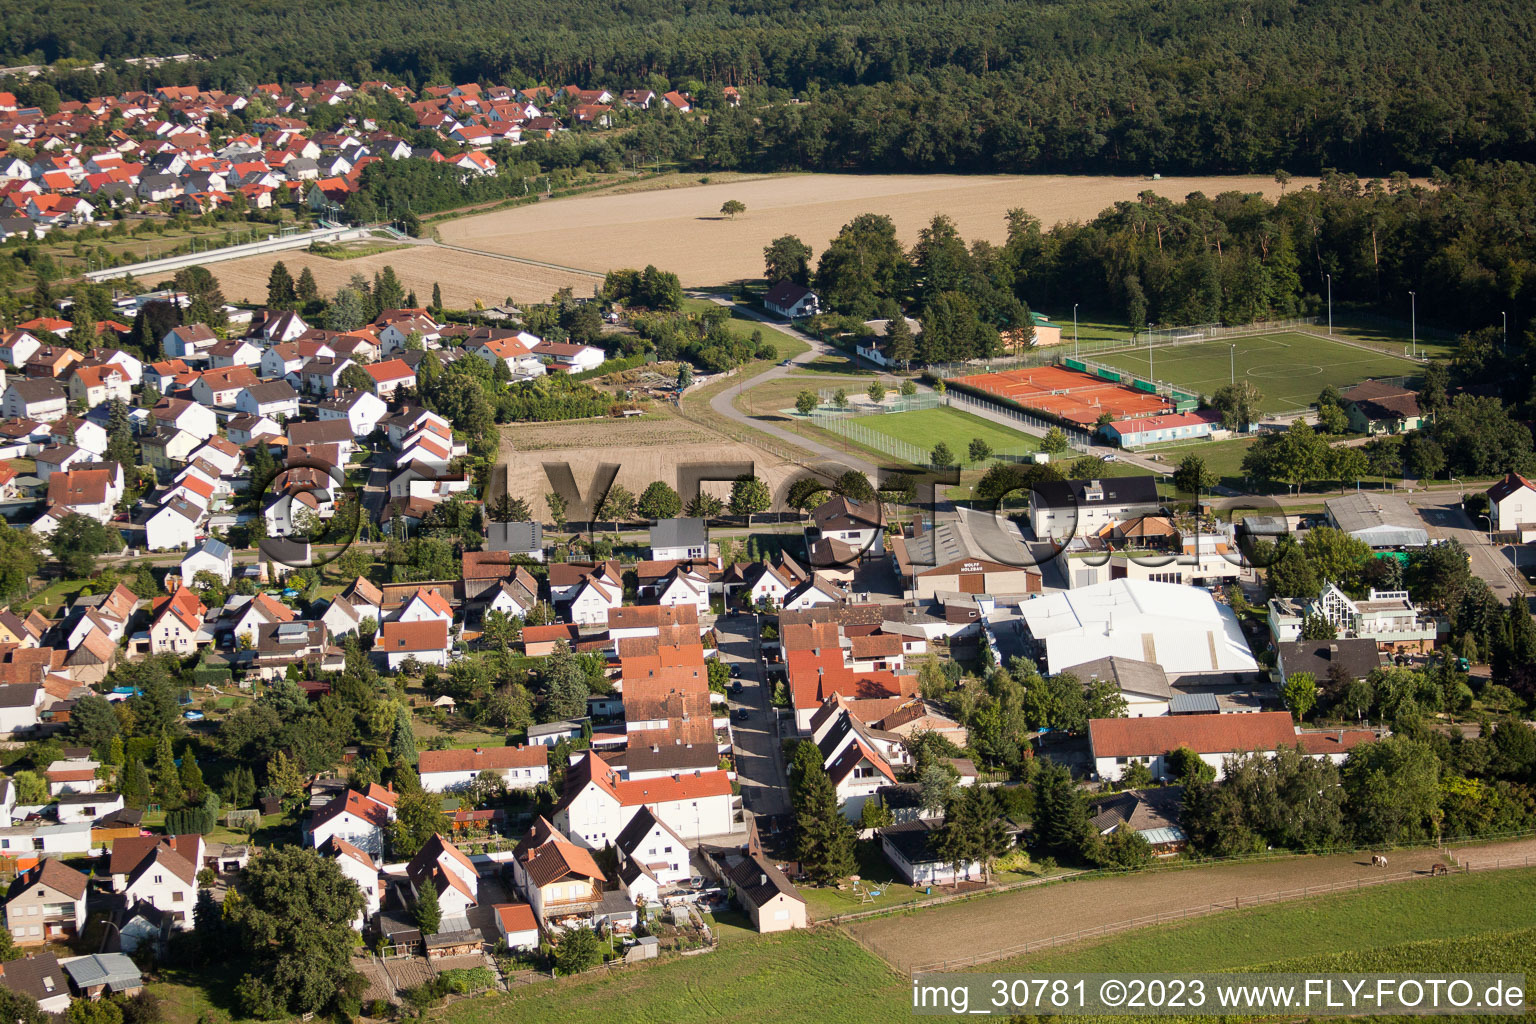 Aerial view of Sports fields in Rheinzabern in the state Rhineland-Palatinate, Germany